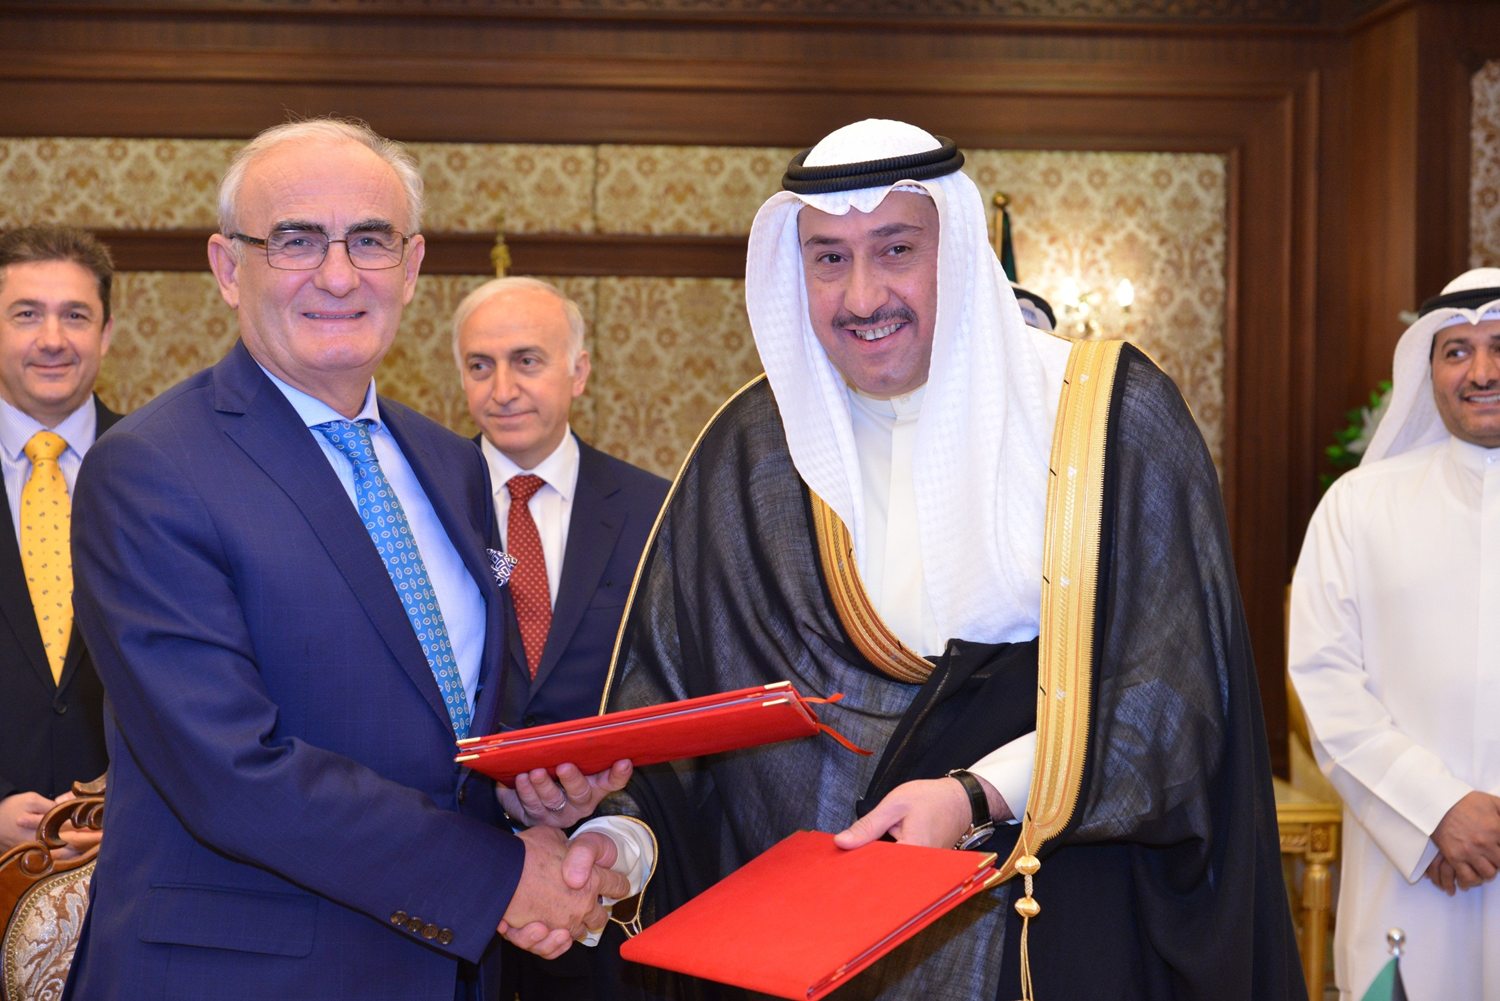 Farwaniya Governor Sheikh Faisal Al-Humoud Al-Malek Al-Sabah and Turkey's Samsun Governor Ibrahim Sahin during the signing ceremony